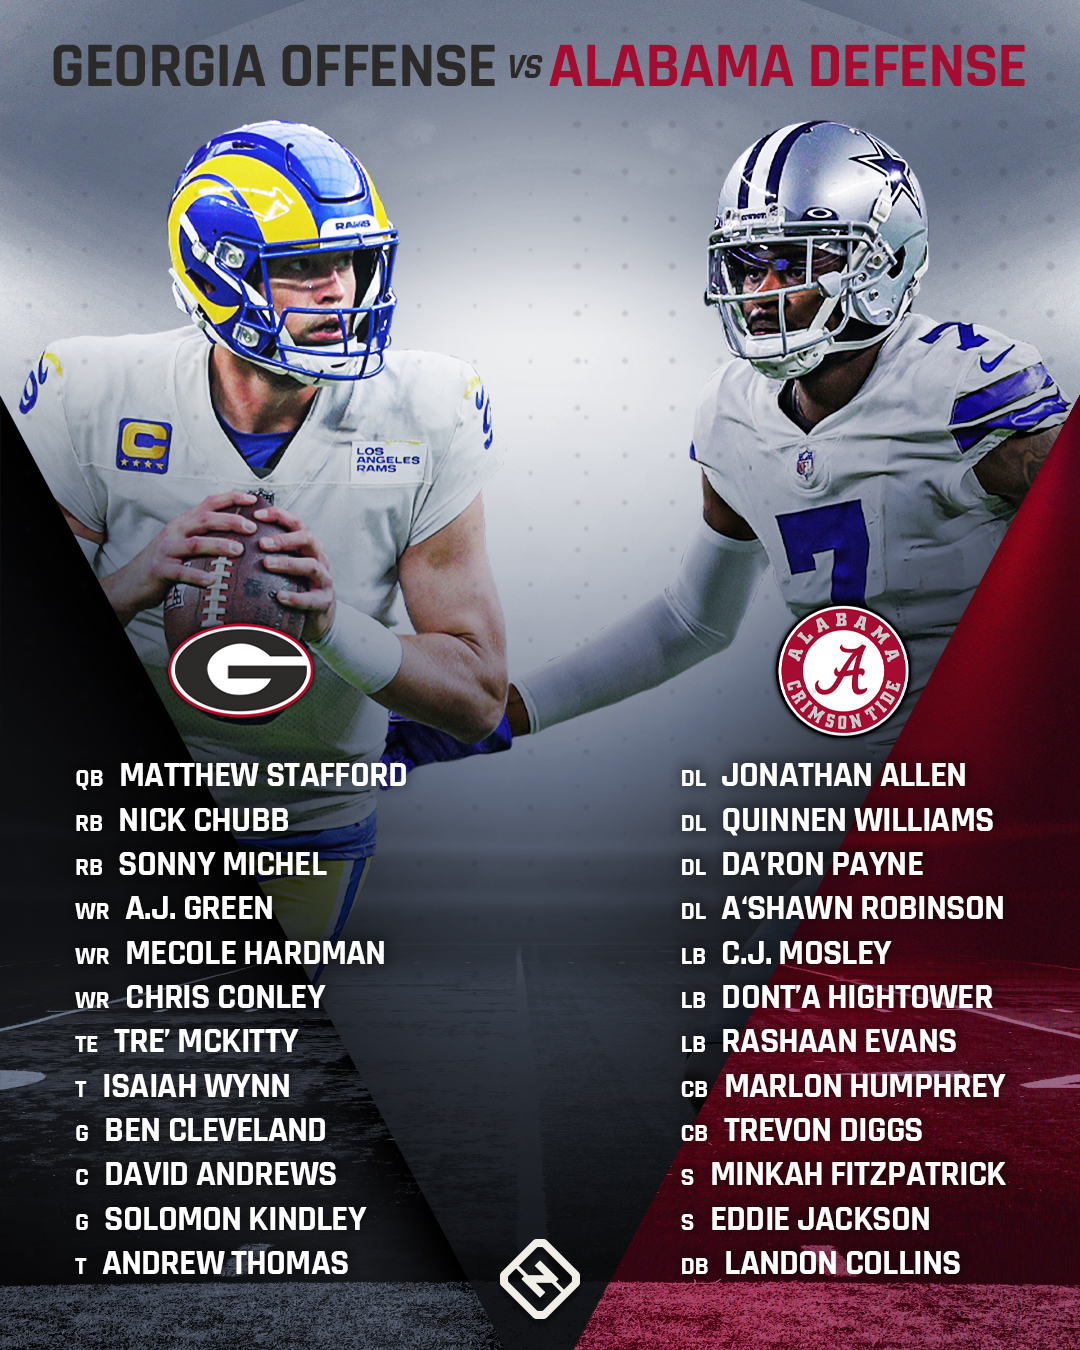 Lineups-of-Alabama-(D)-NFL-players-vs.-Georgia-(O)-NFL-players.jpg